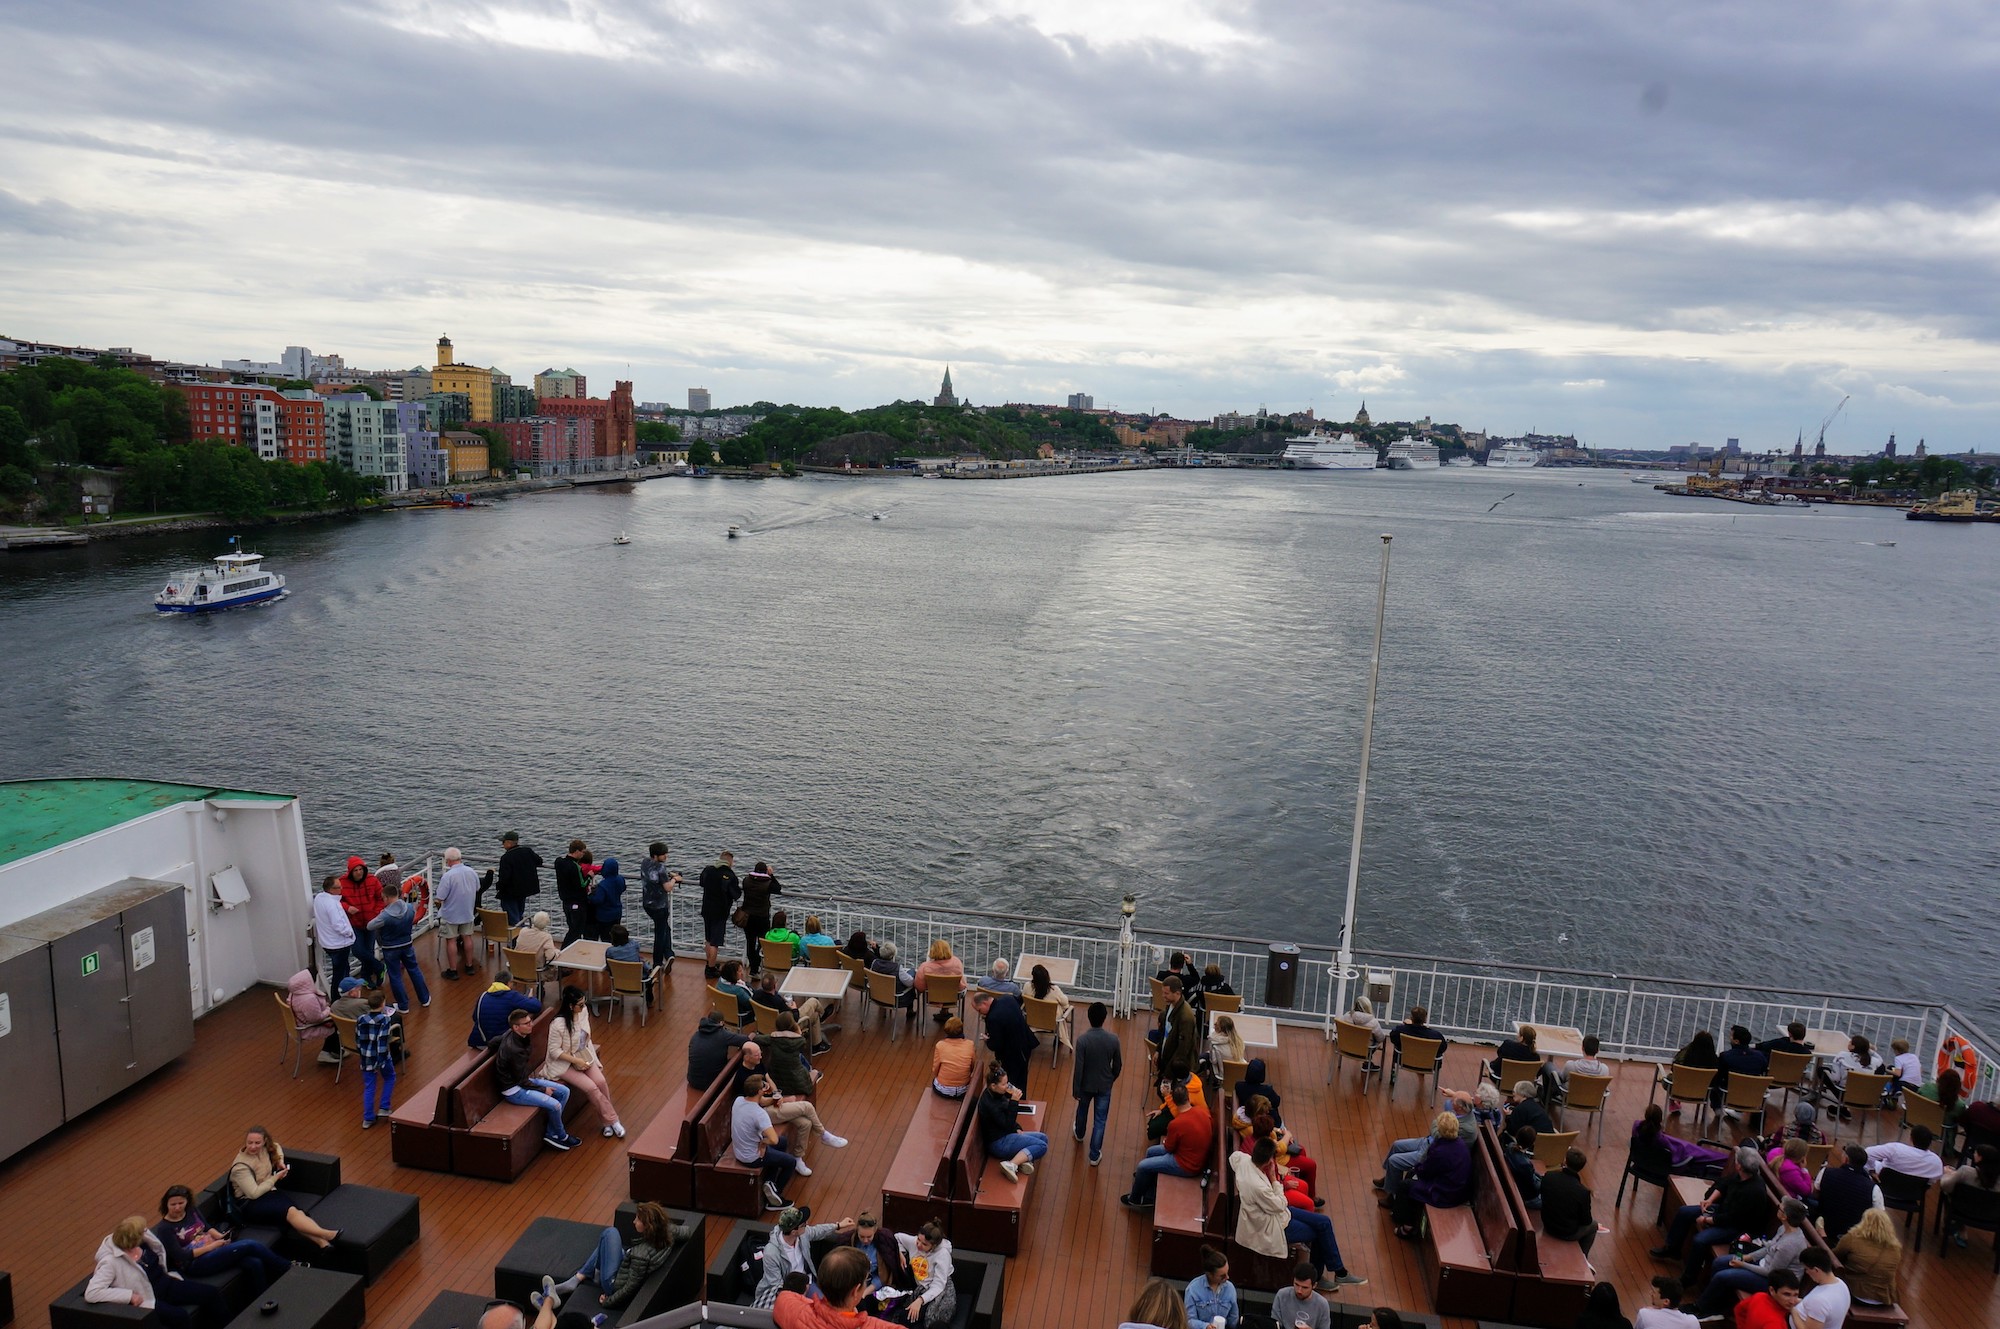 Departing Stockholm aboard a ferry from Stadsgården port.